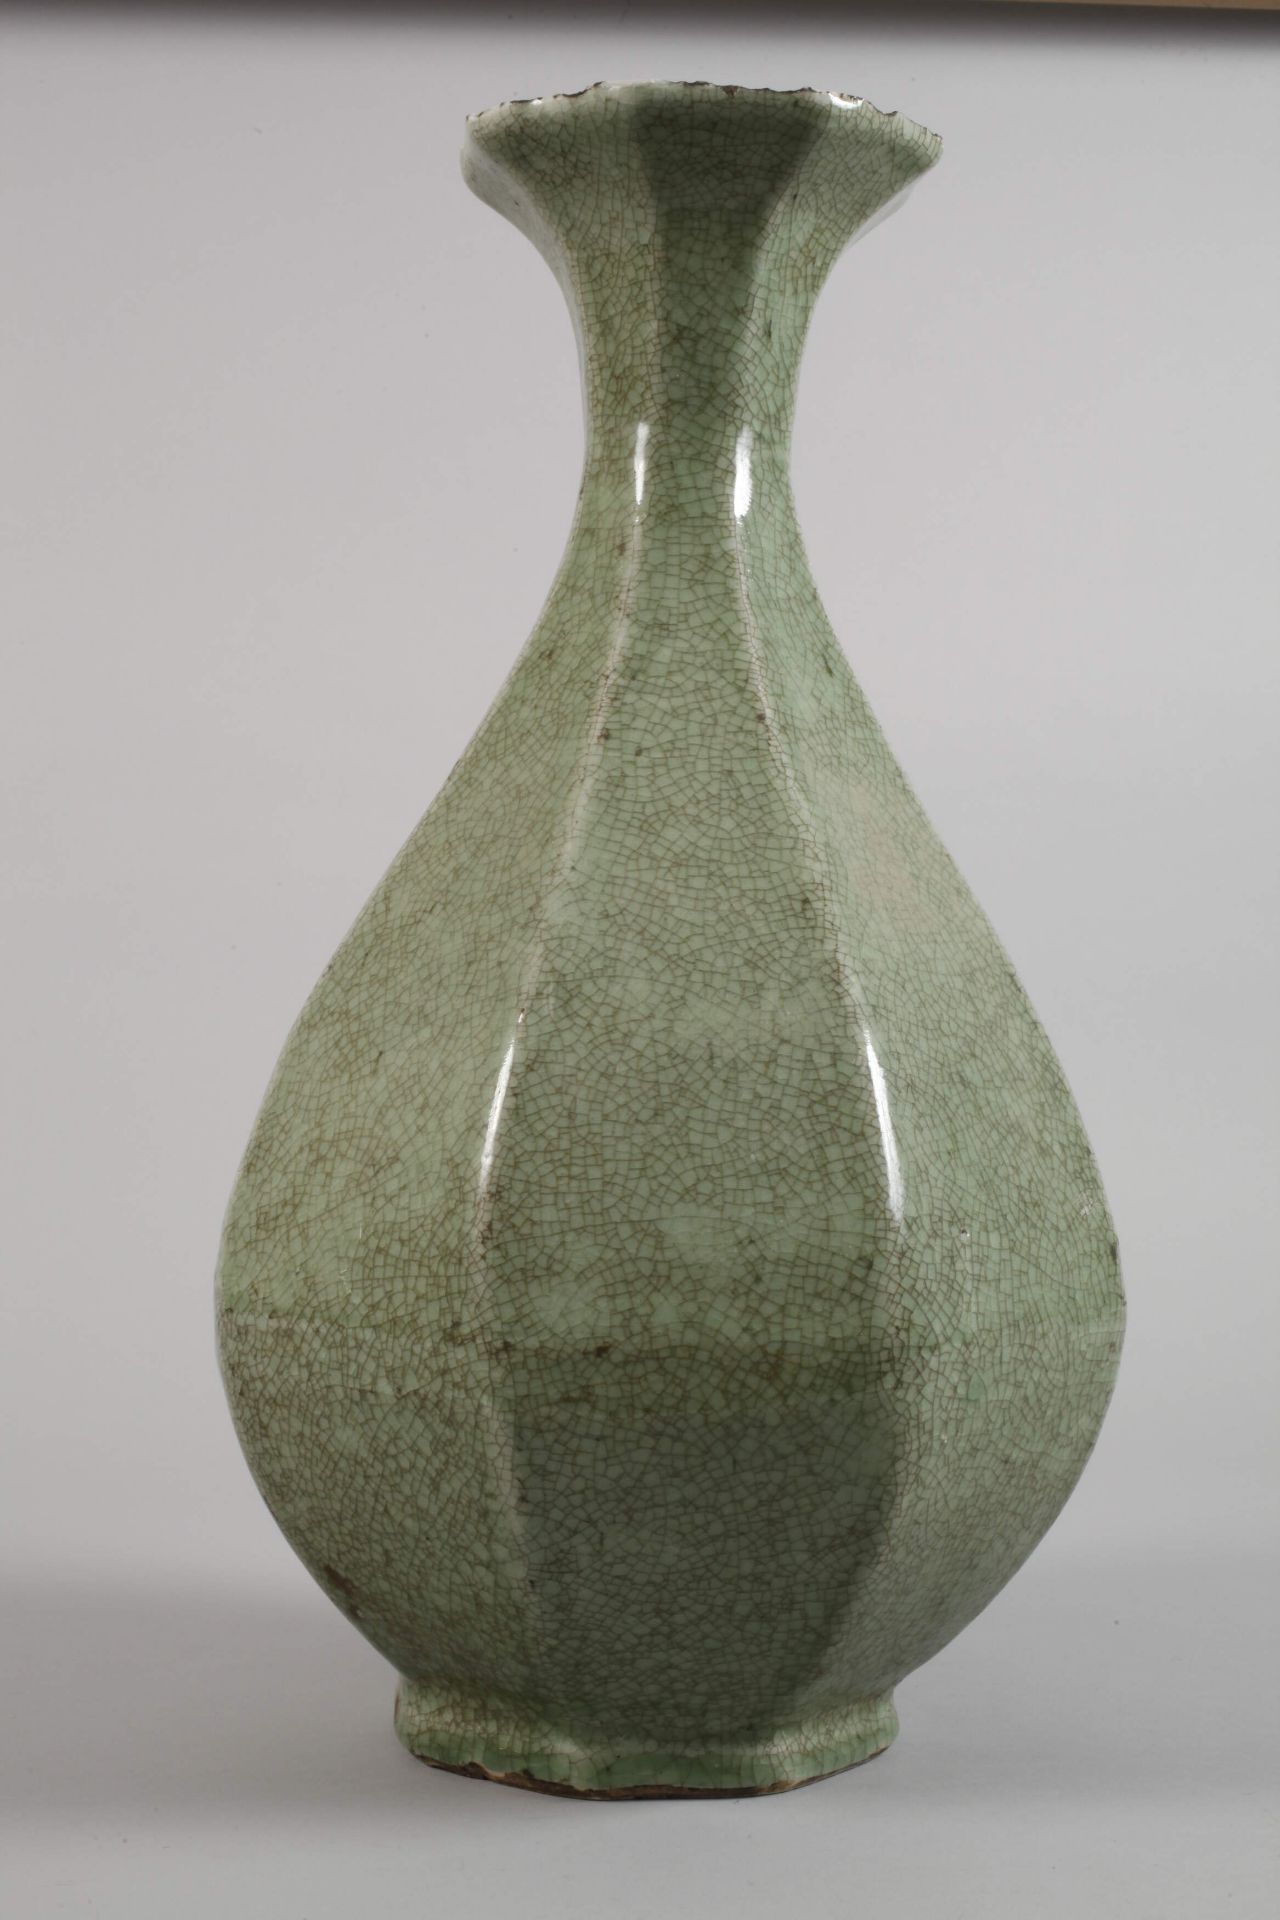 Qing Dynasty vase - Image 2 of 5